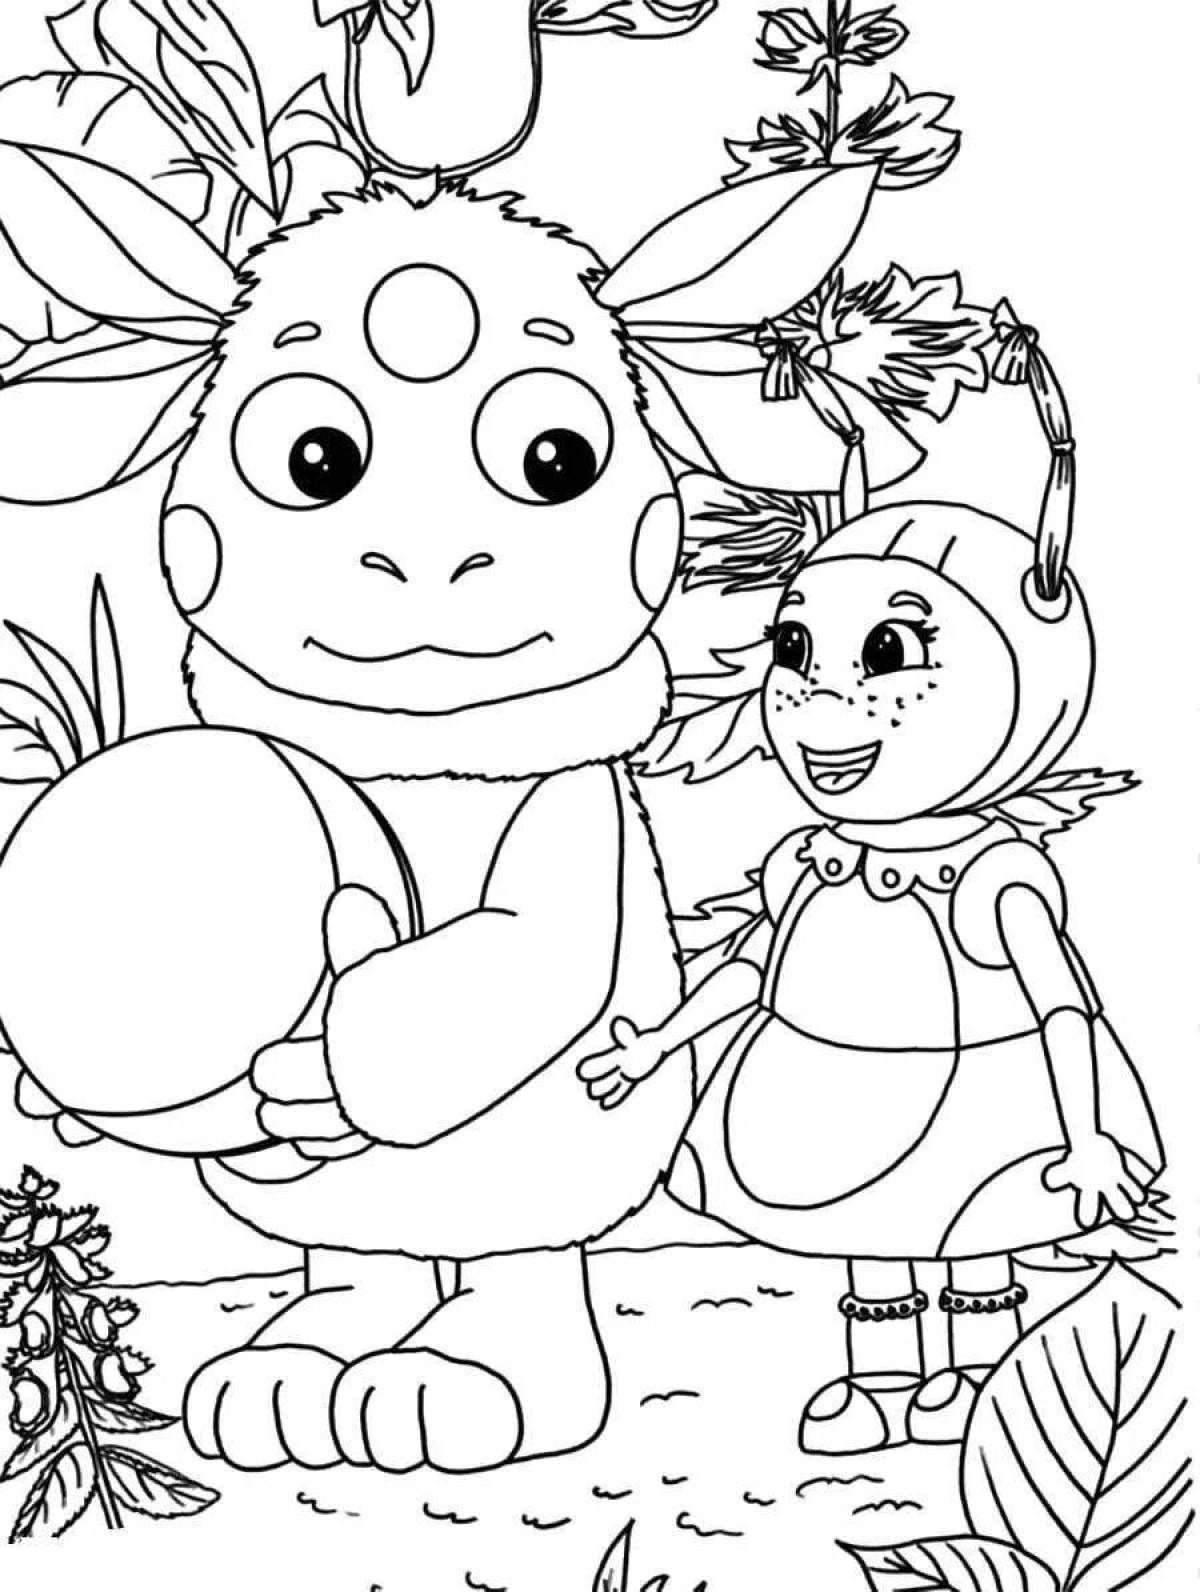 Joyful cartoon coloring book for girls 5-6 years old